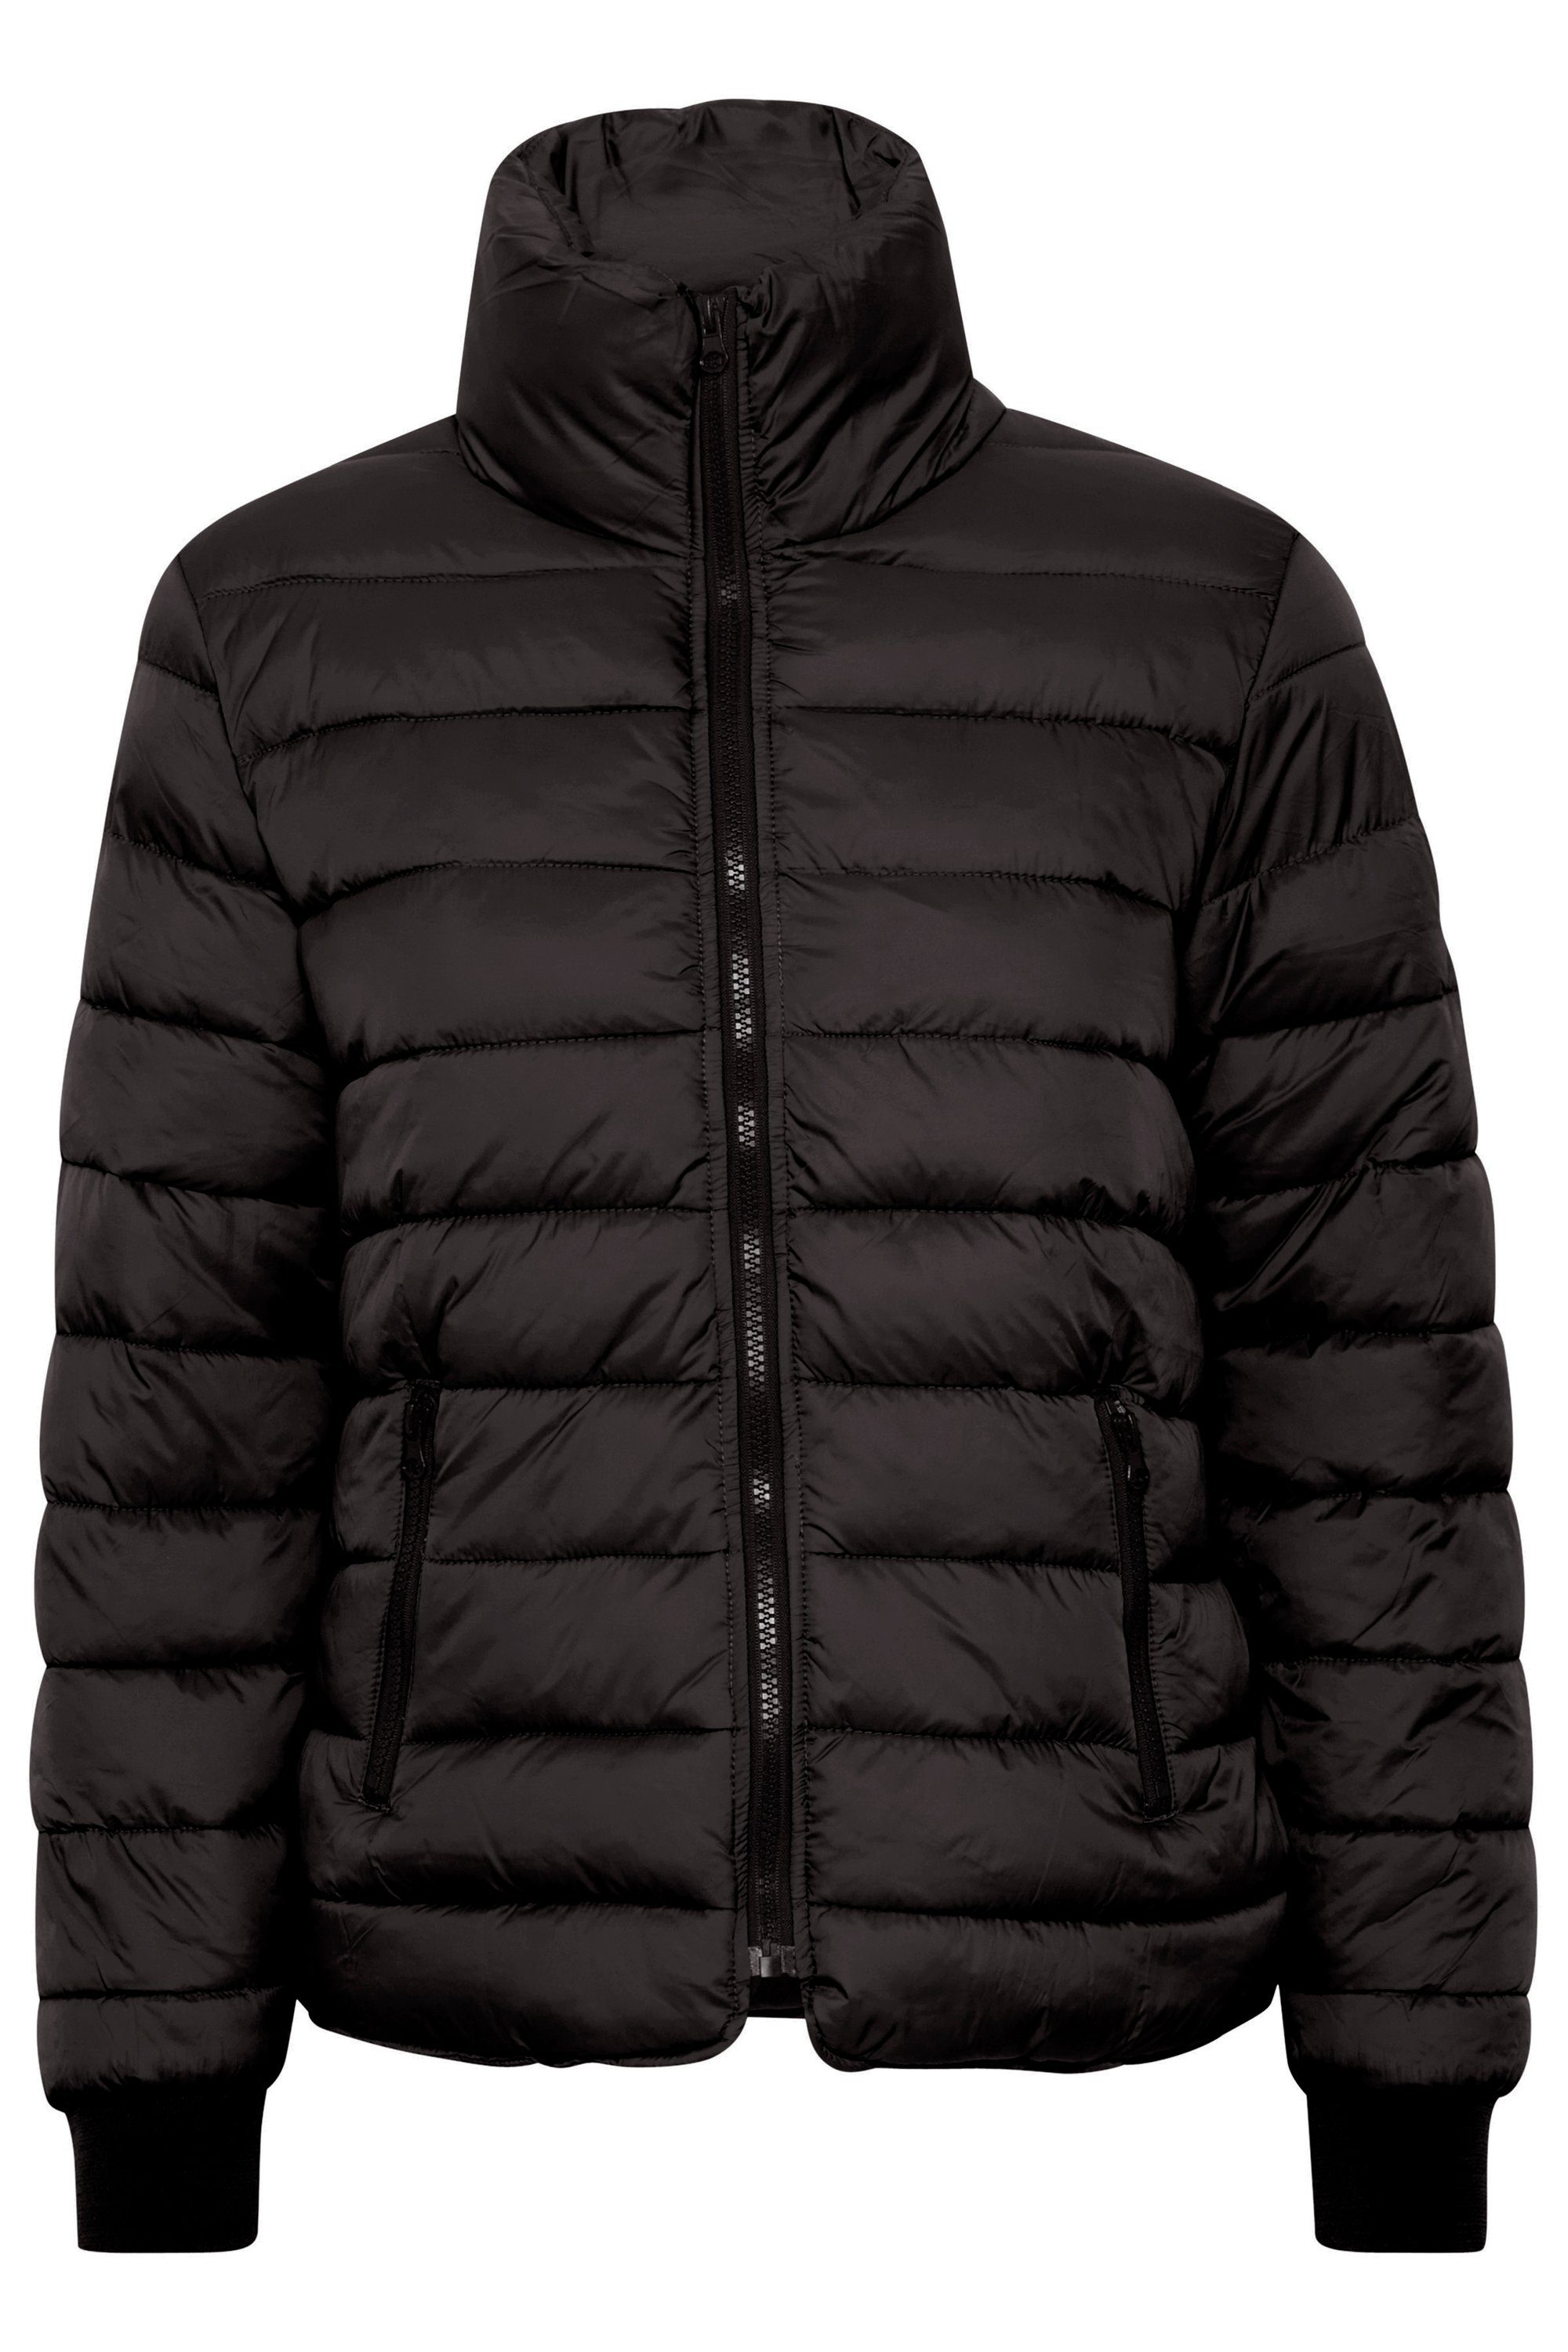 Black KAFFE Jacket Wintermantel KAlira Deep